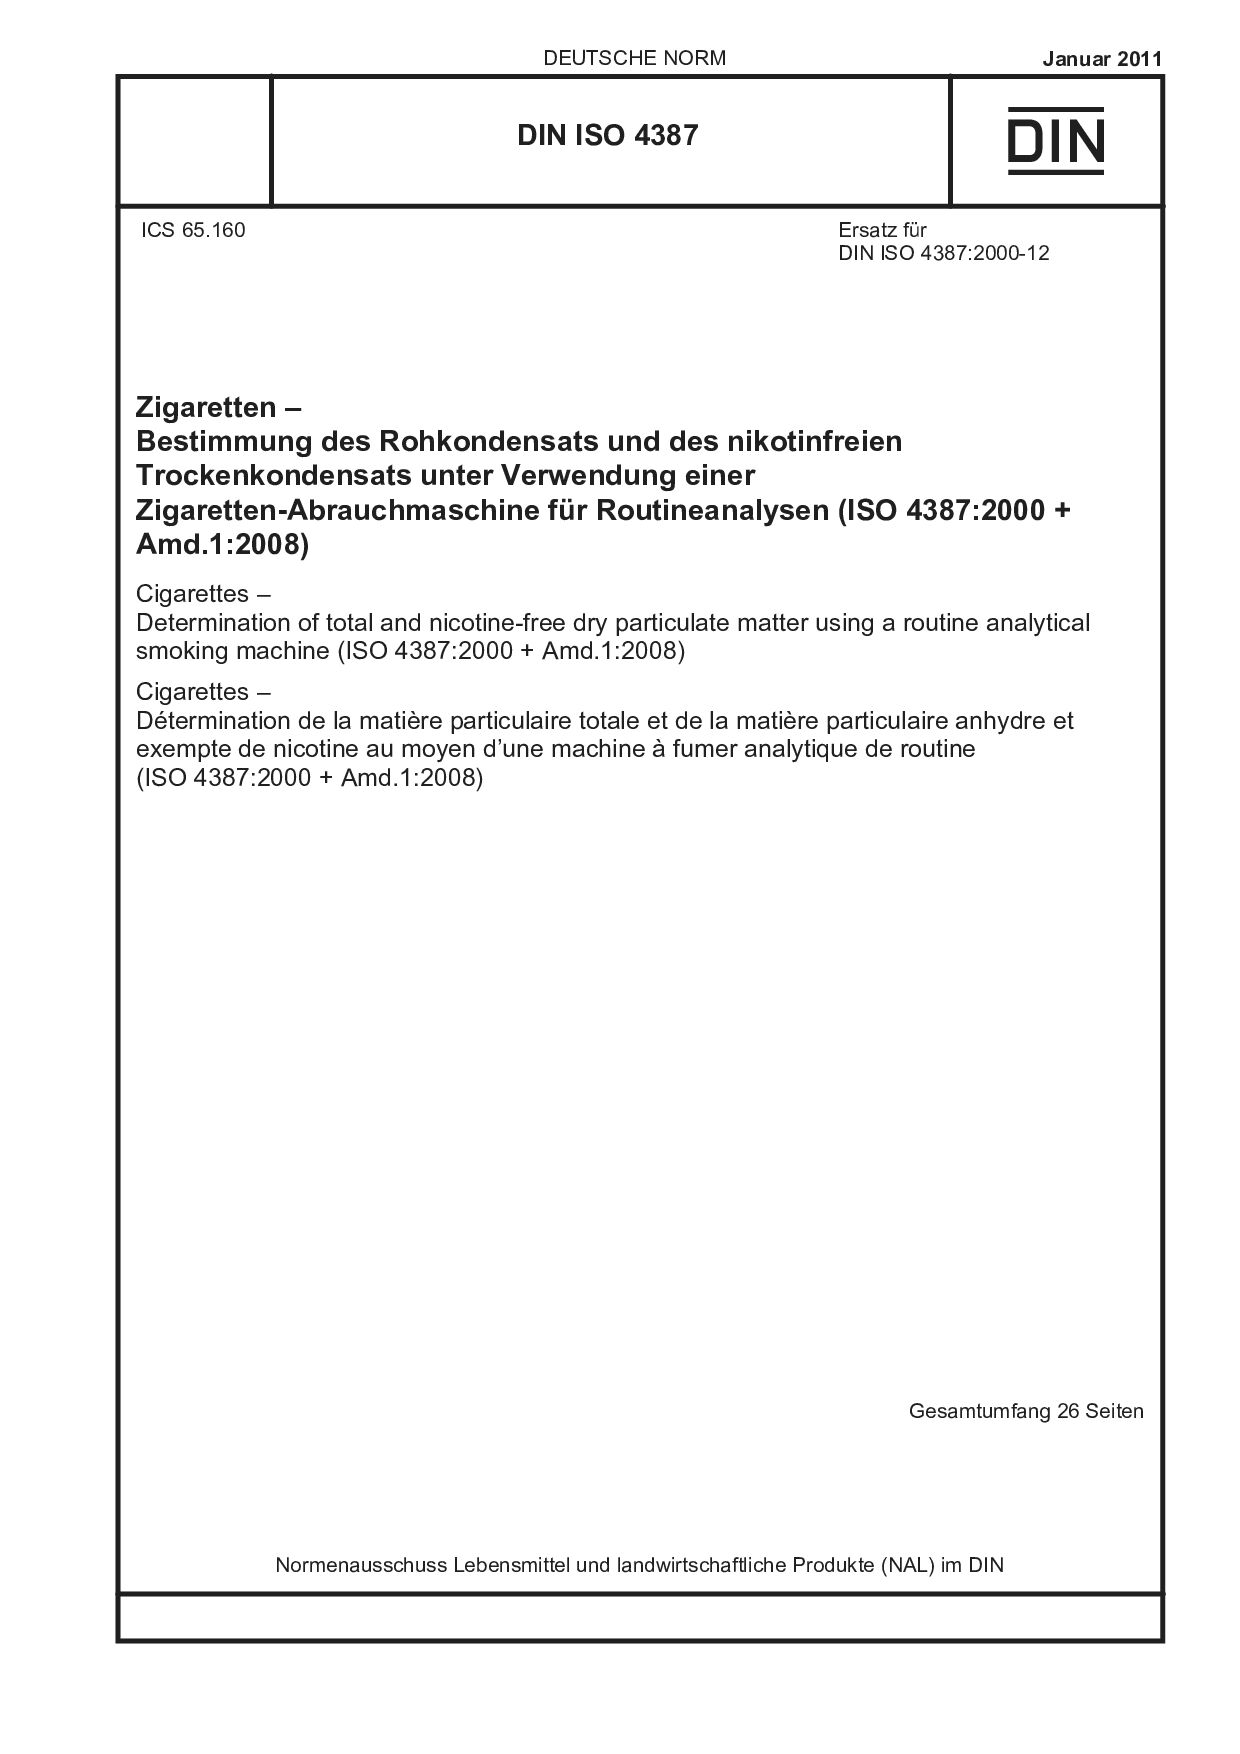 DIN ISO 4387:2011